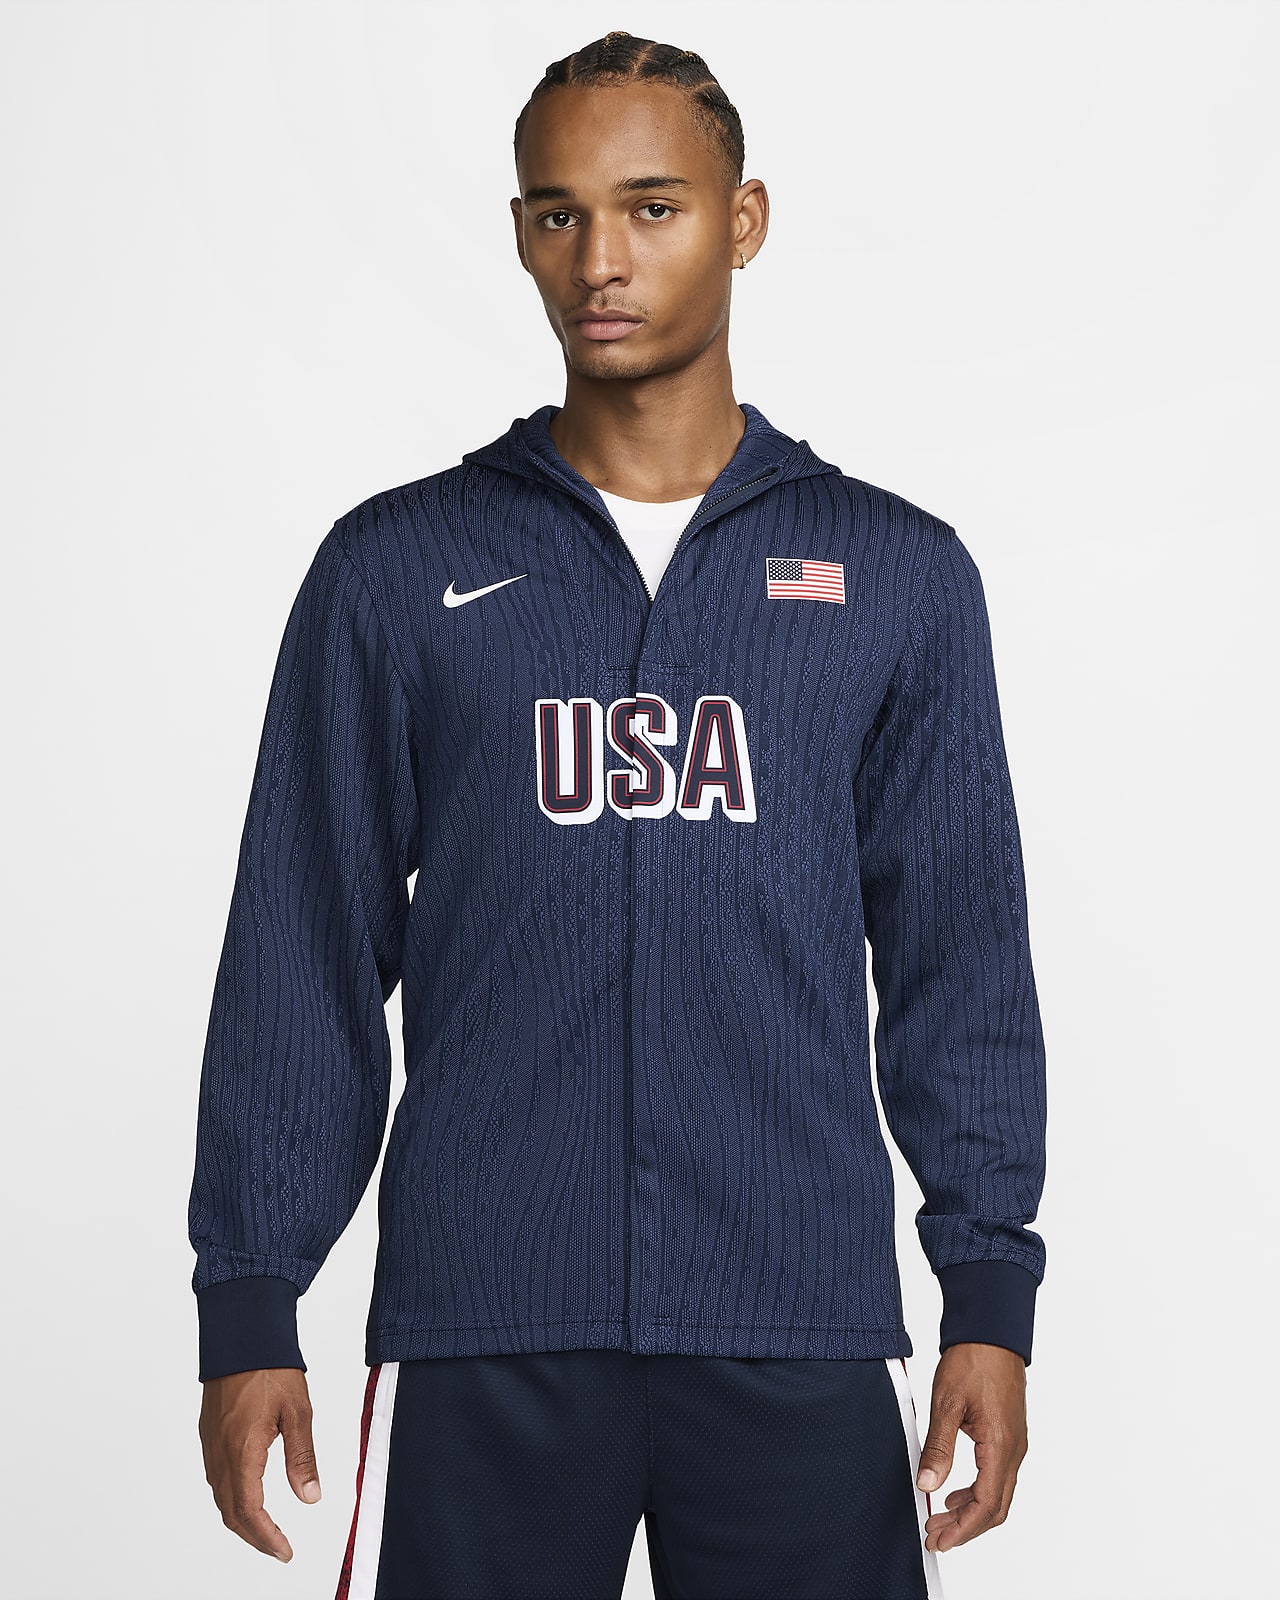 USA Nike Dri-FIT ADV Basketball-Spieljacke (Herren)